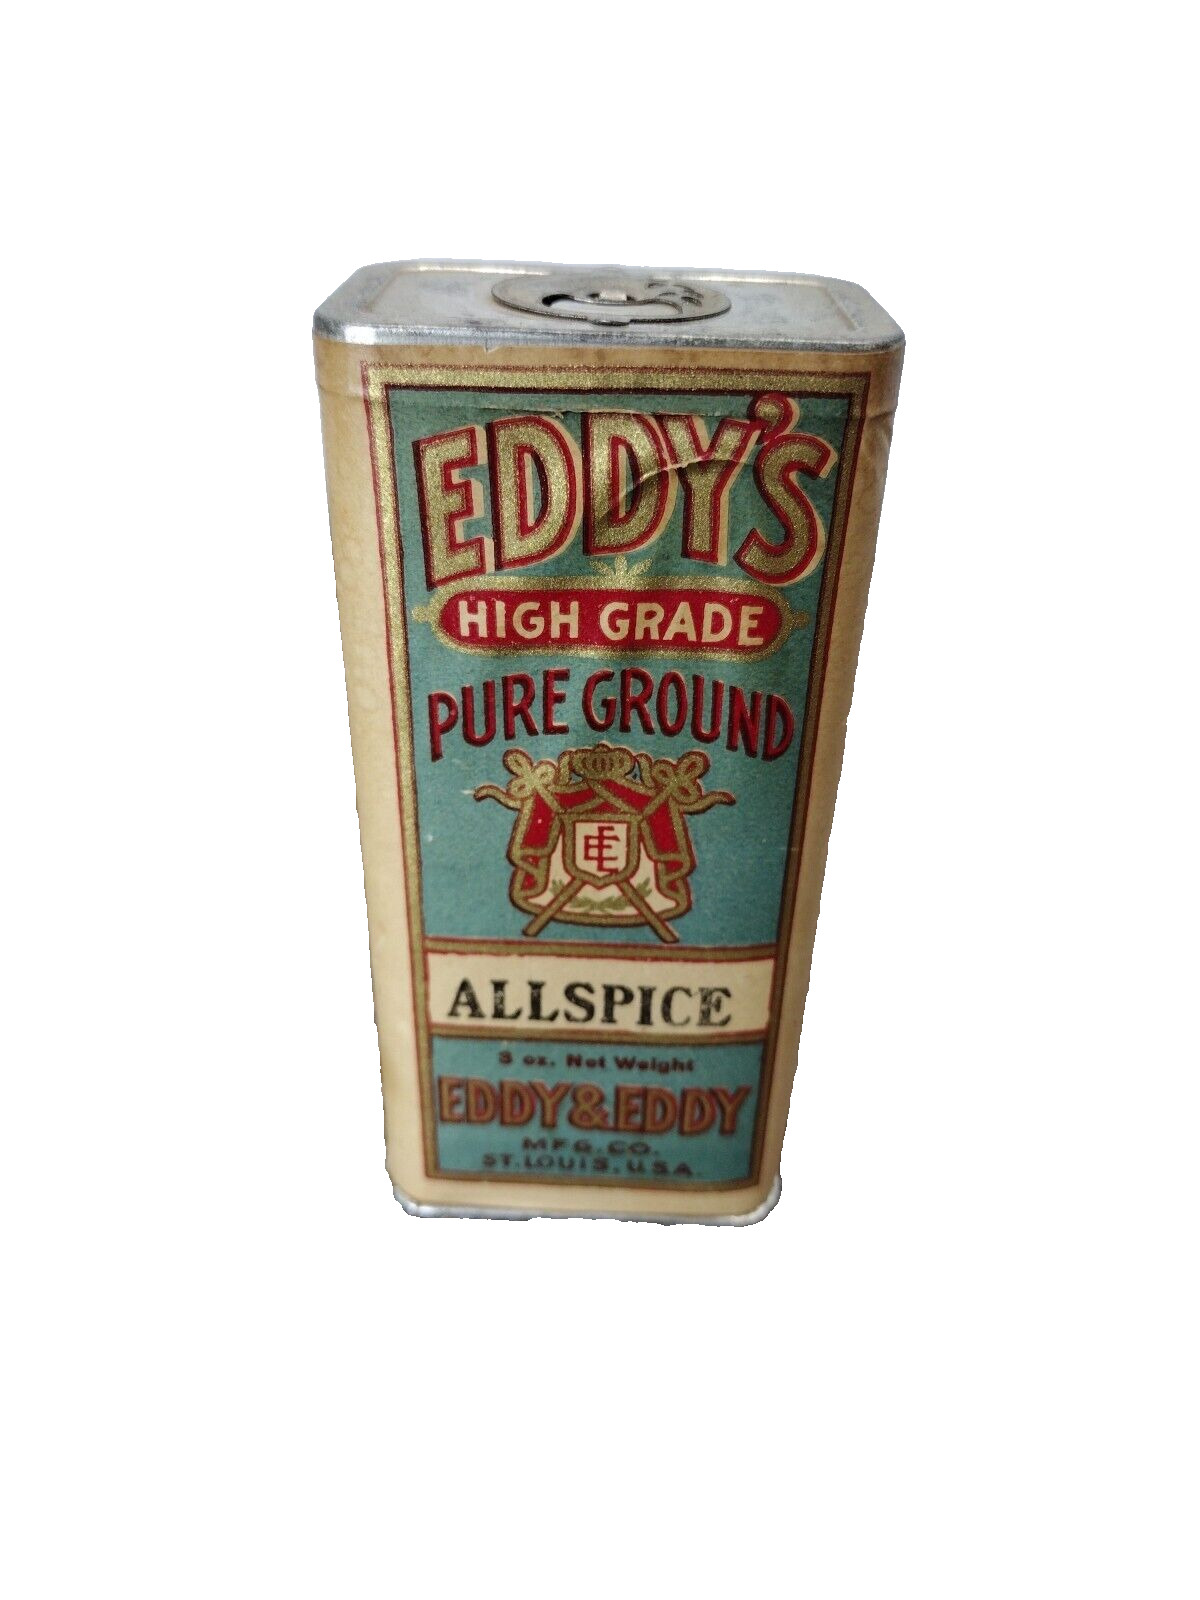 RARE EDDY\'S HIGH GRADE GROUND ALLSPICE TIN VTG ANTIQUE ST. LOUIS MO. EDDY & EDDY